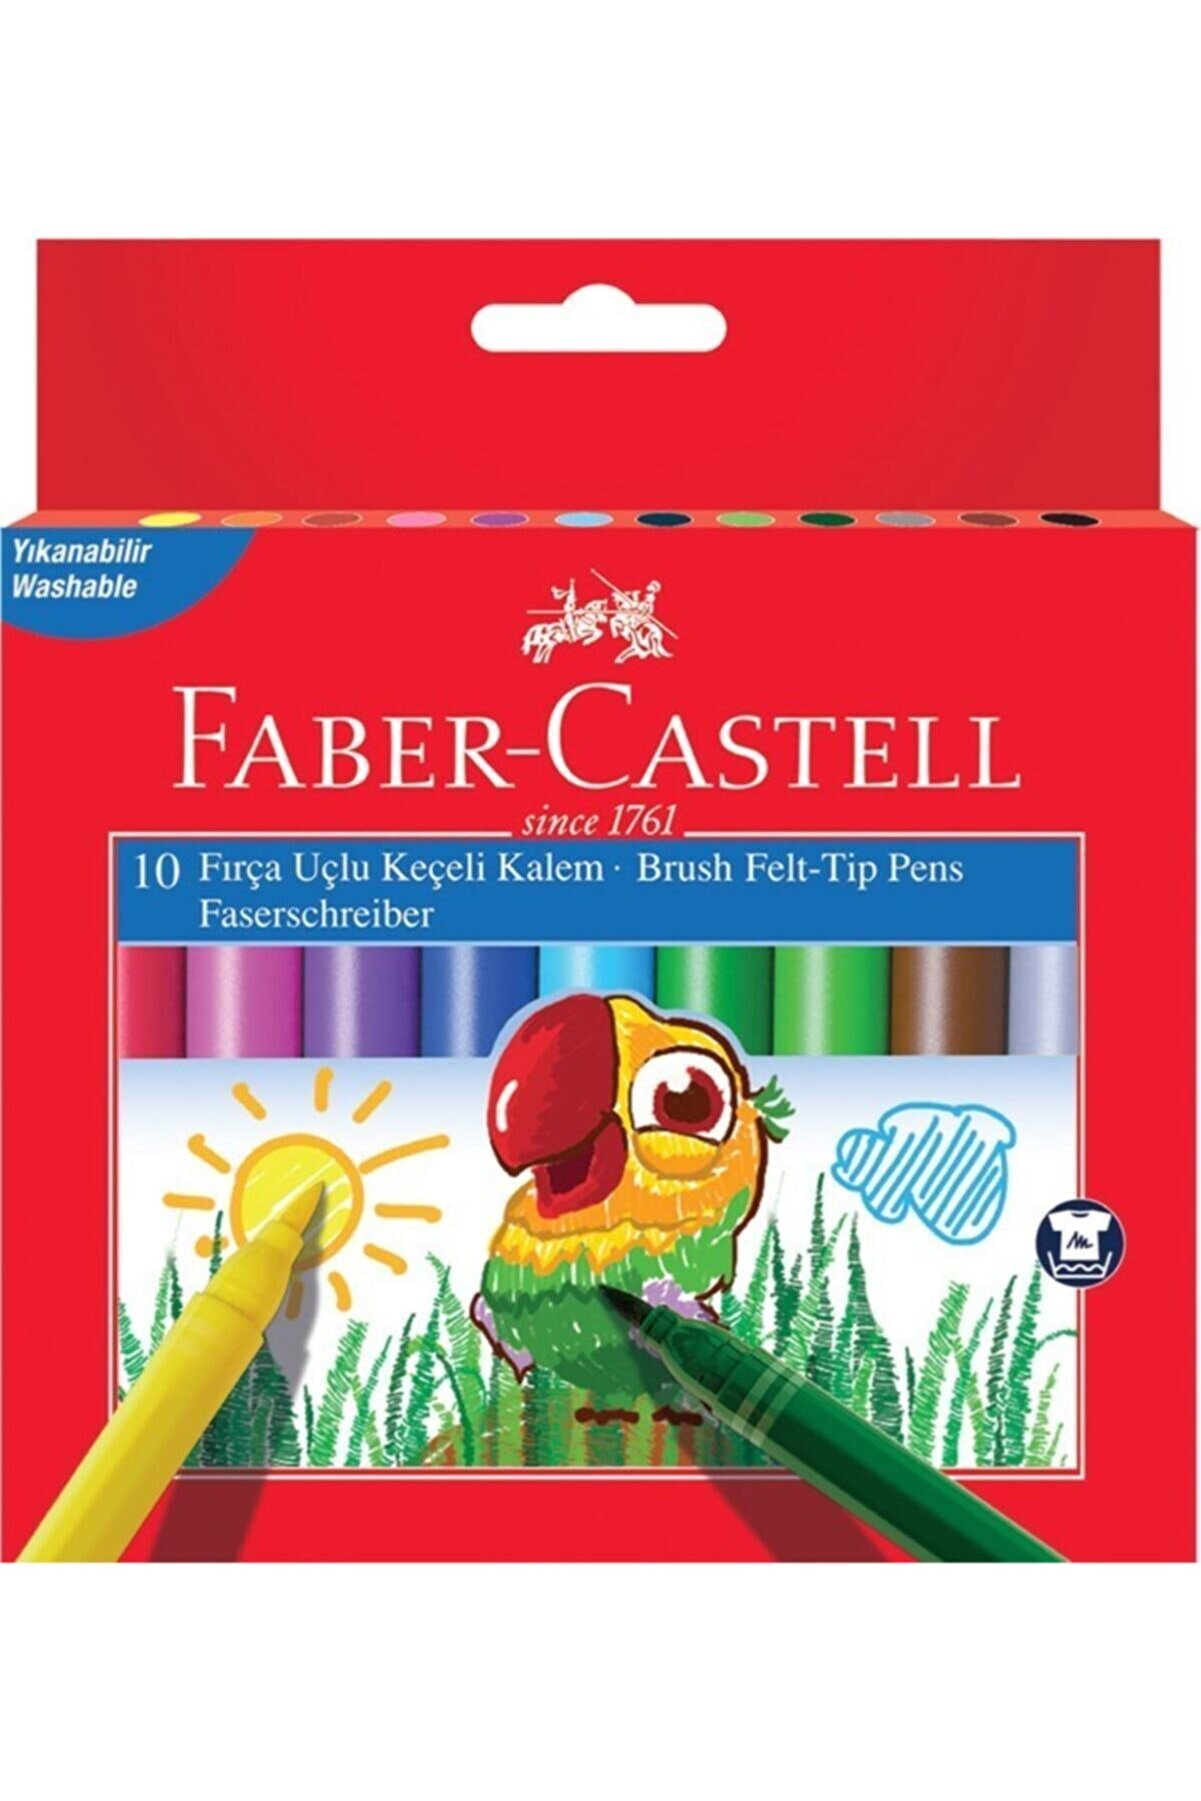 Faber Castell Faber-castell Winner Brush Fırça Uçlu Keçeli Kalem 10r